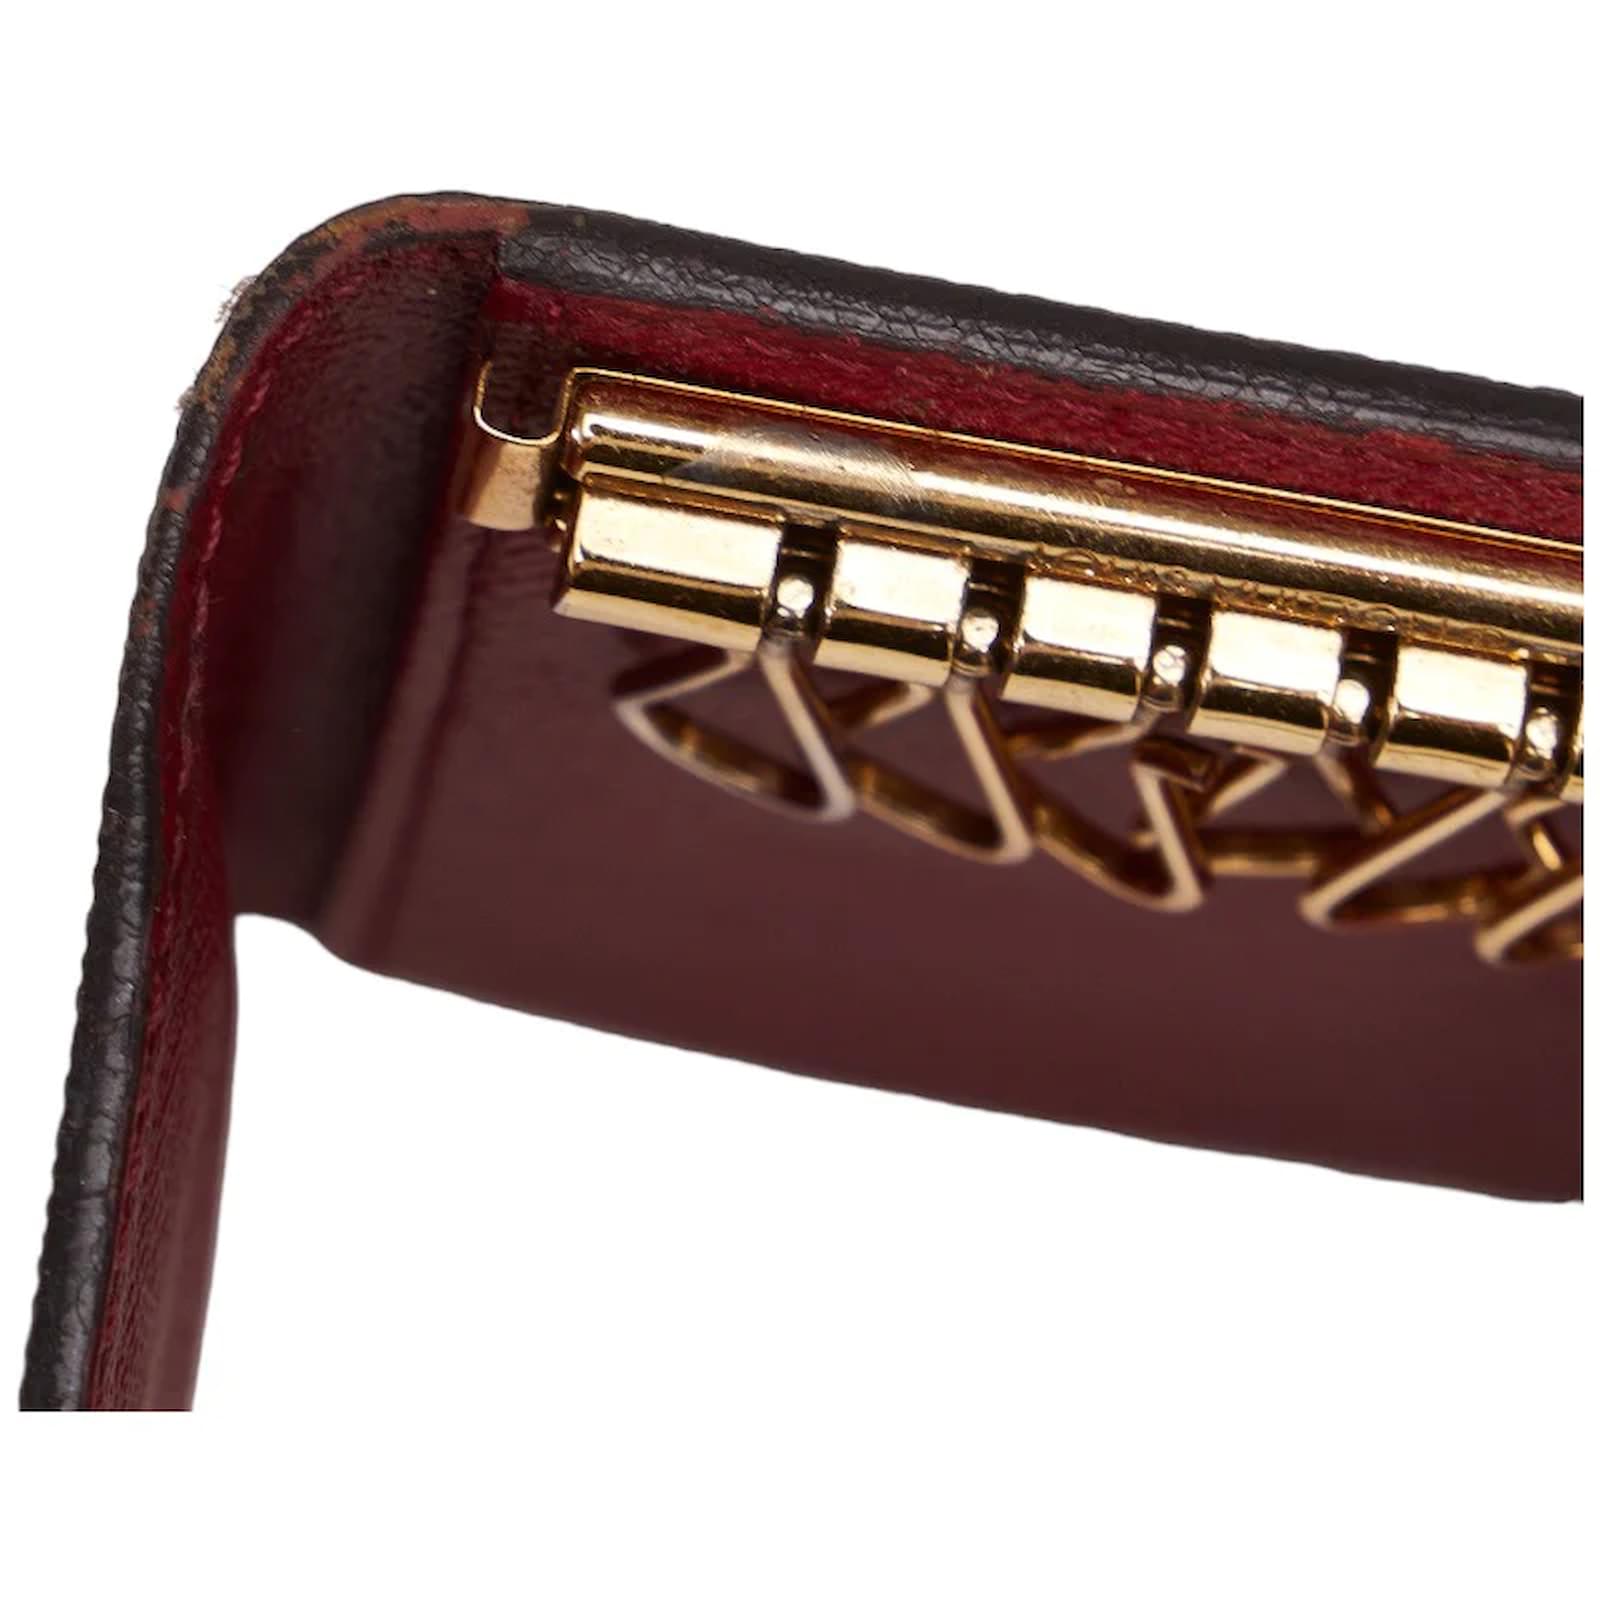 Shop Louis Vuitton MONOGRAM 6 key holder (M60701, N62630, M62630) by  iRodori03